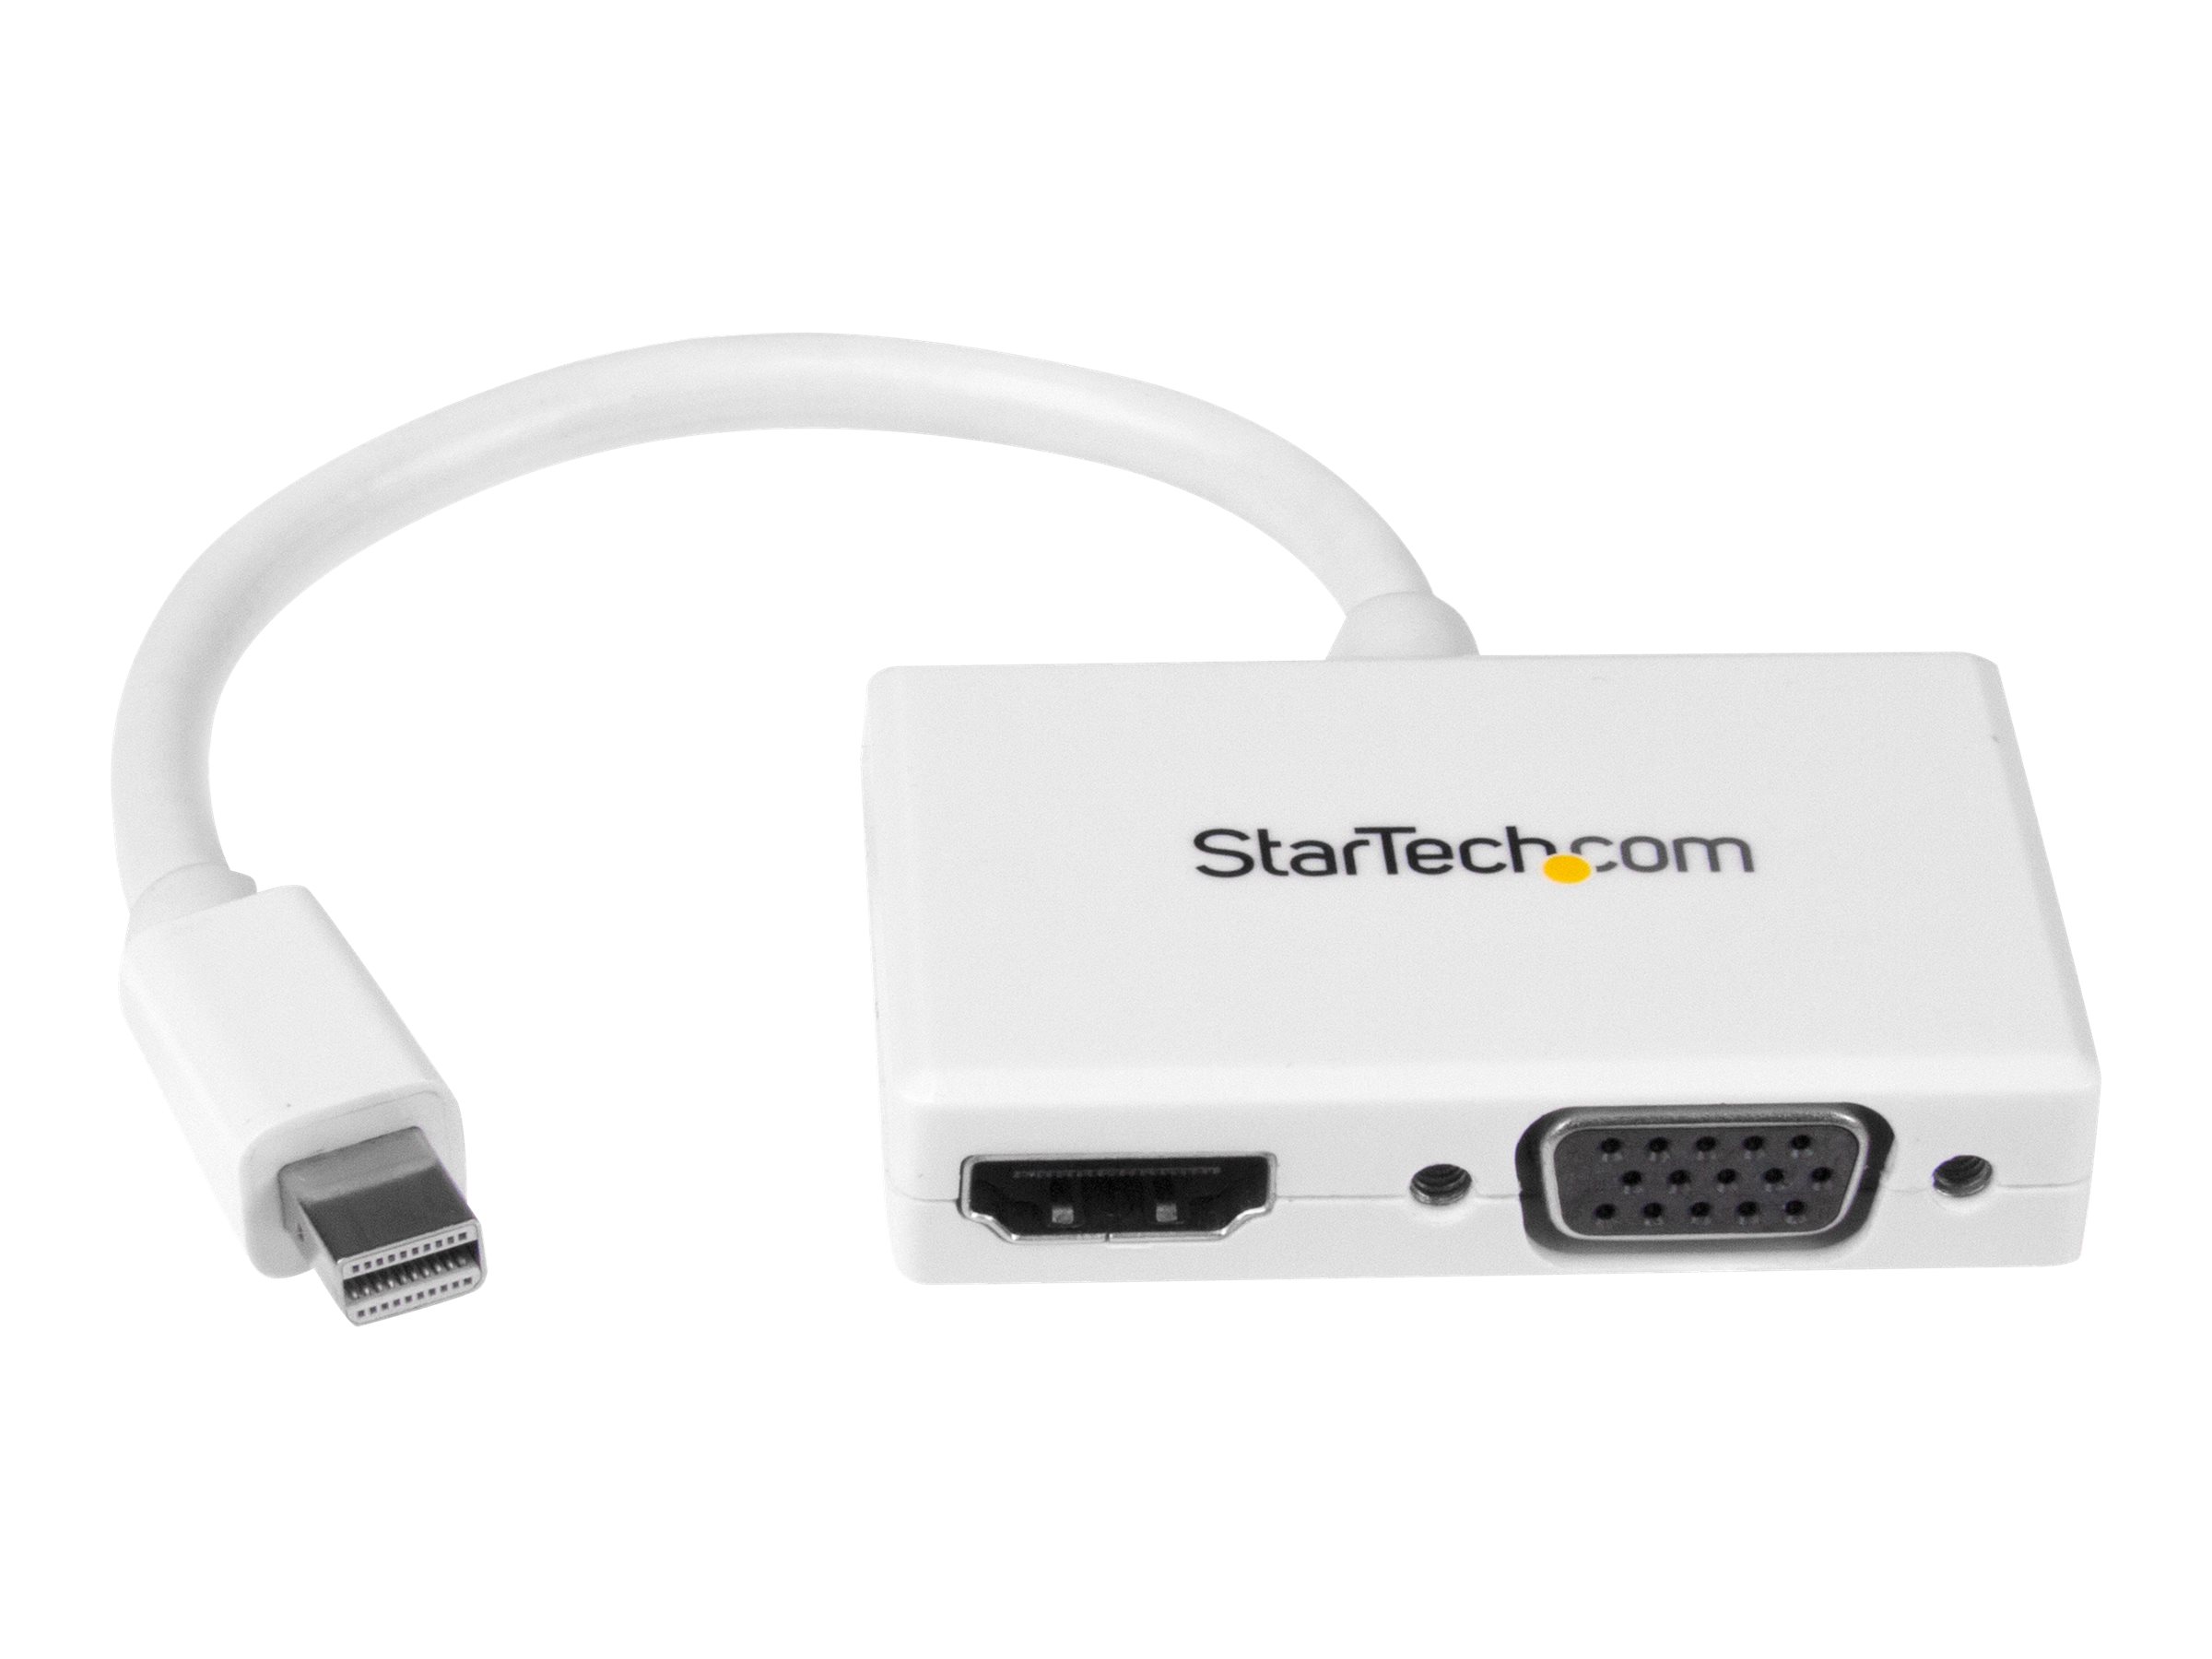 StarTech.com Reise A/V Adapter: 2-in-1 Mini DisplayPort auf HDMI oder VGA Konverter - mDP zu HDMI / VGA Adapter im kompakten Des